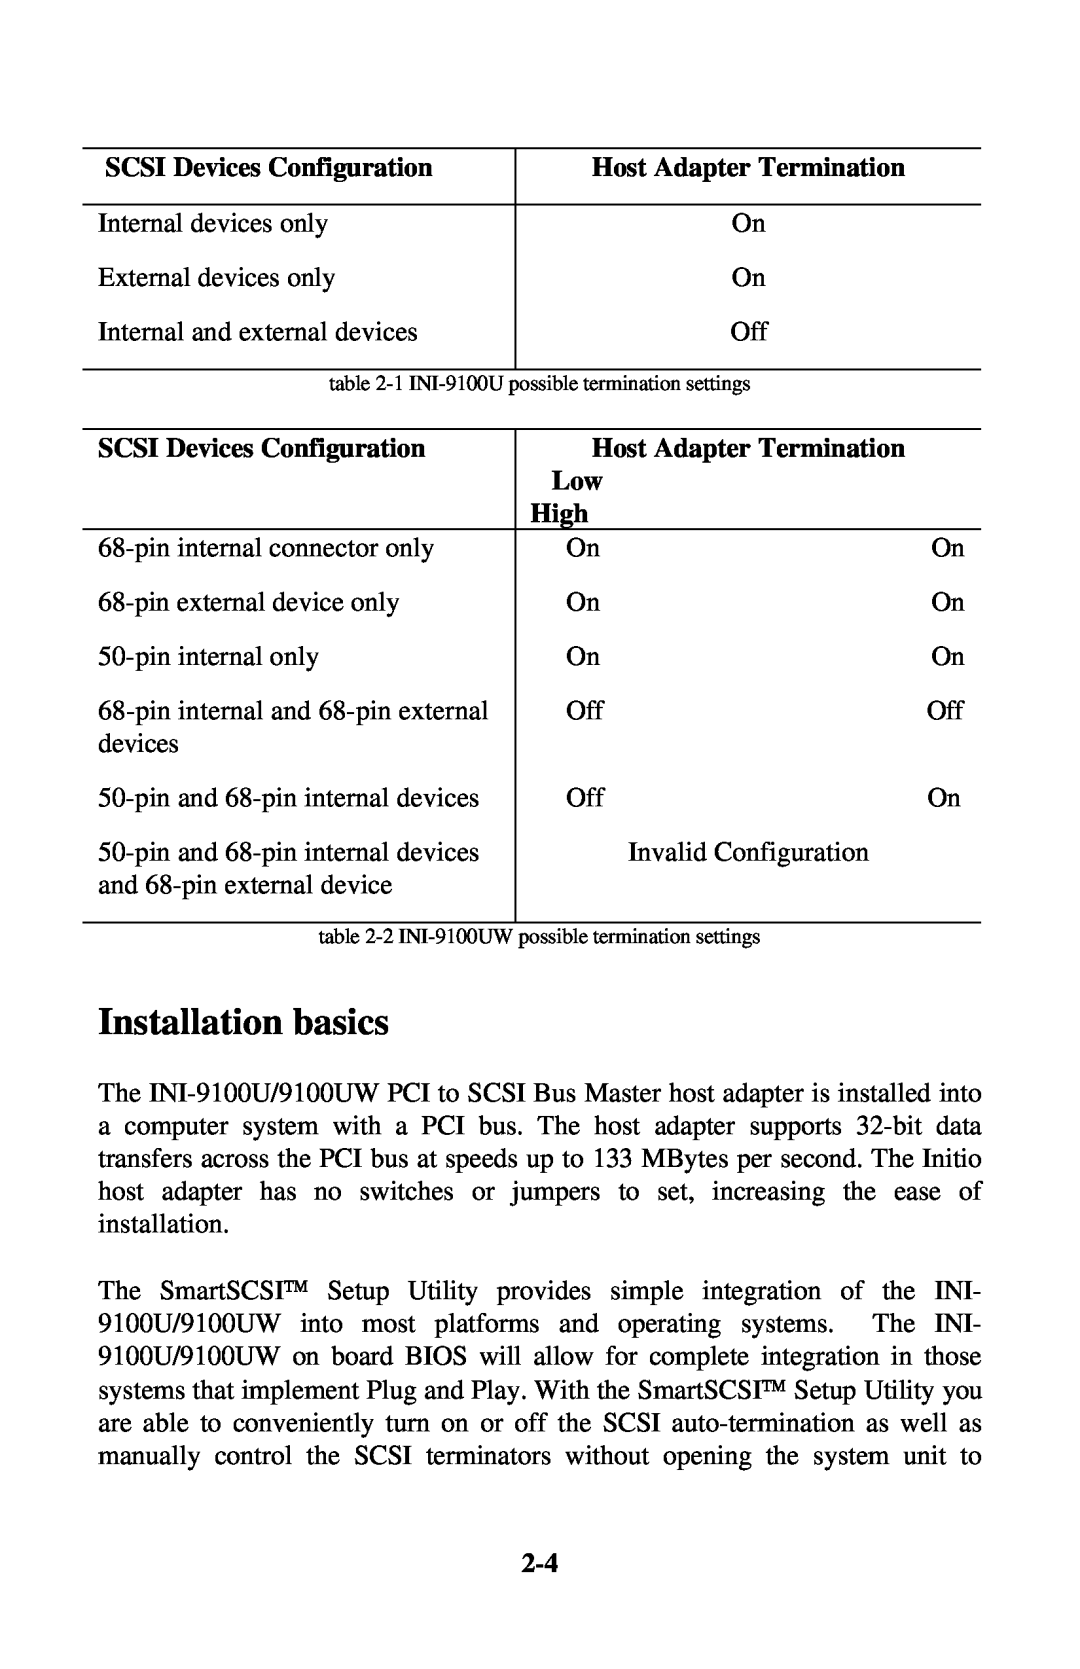 Initio INI-9100UW user manual Installation basics, SCSI Devices Configuration, Host Adapter Termination, High 